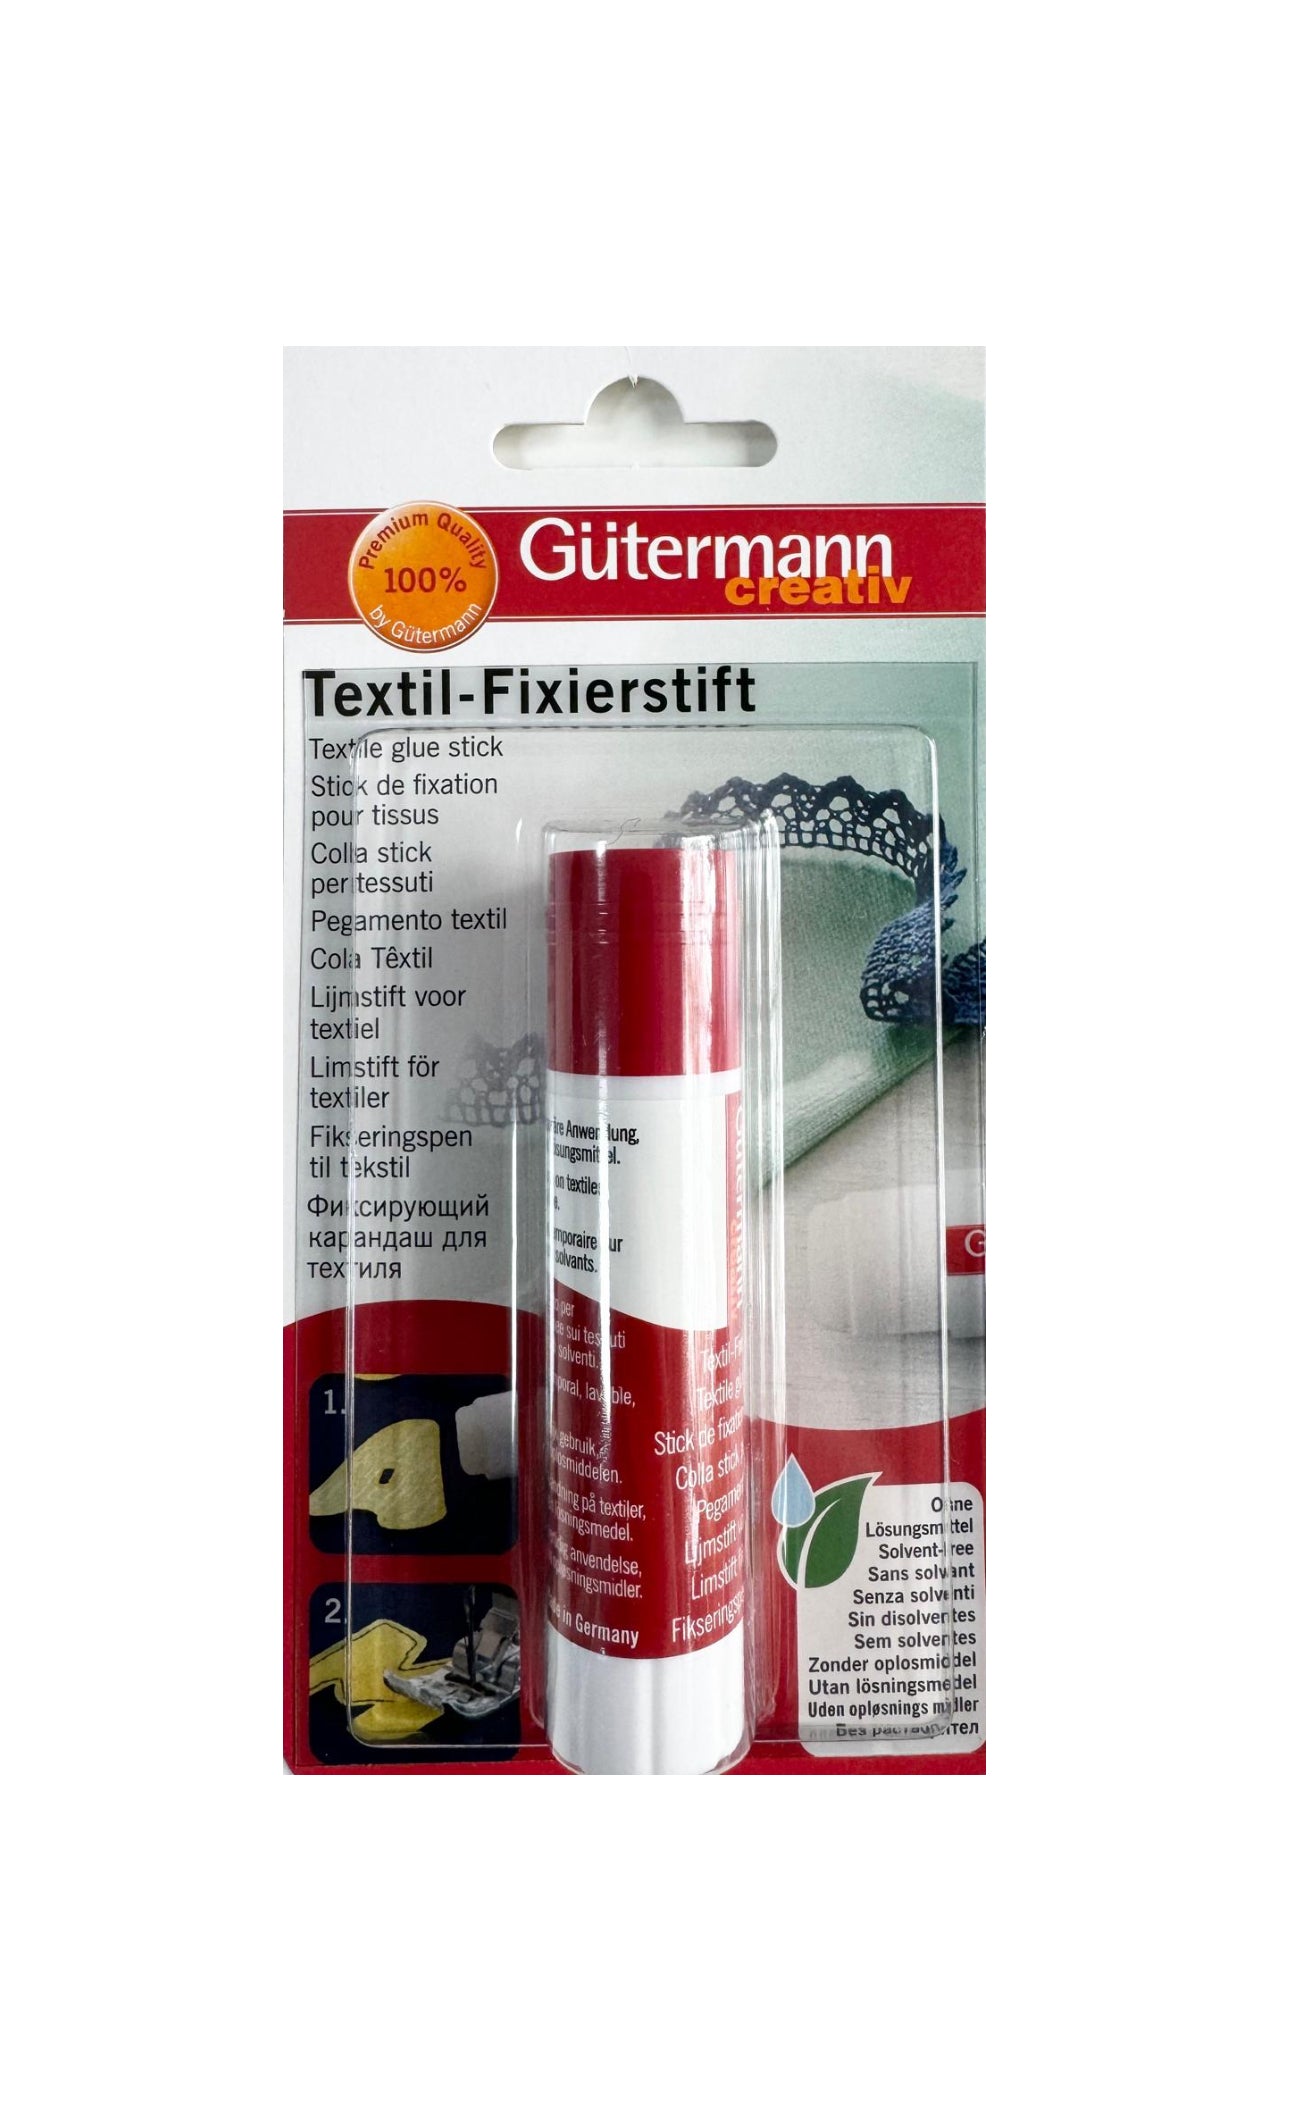 Textilfixierstift | Gütermann Creativ